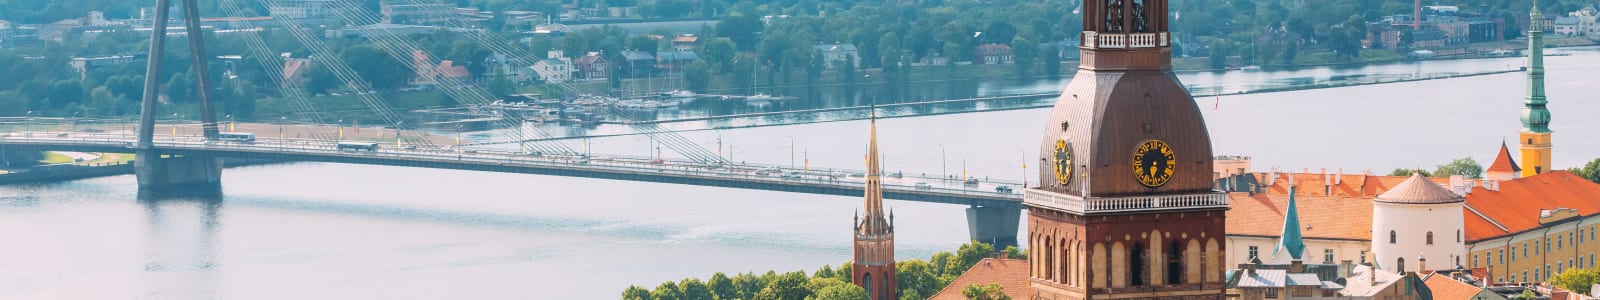 The Railway Bridge in Riga